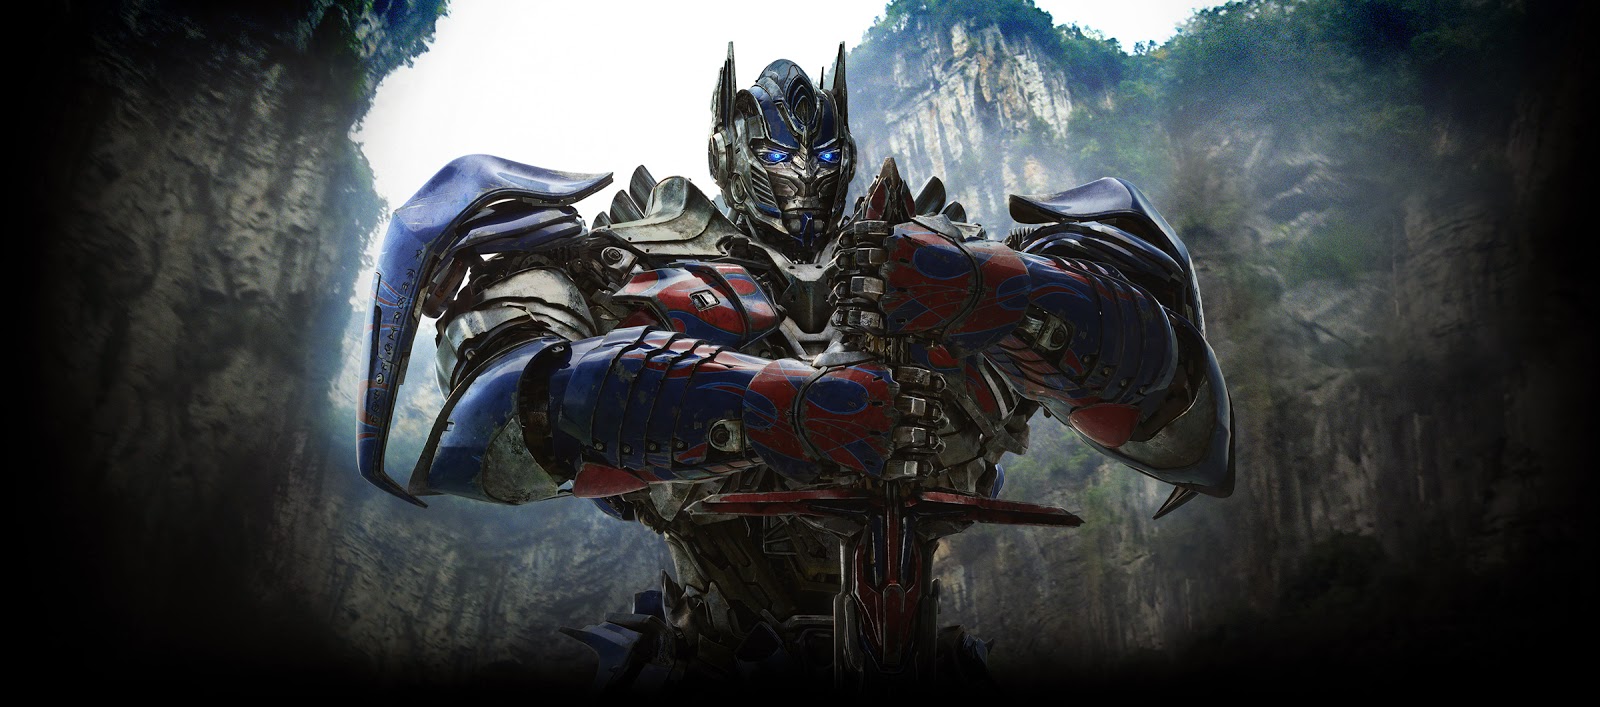  Optimus Prime Transformers 4 age of extinction Desktop Wallpaper